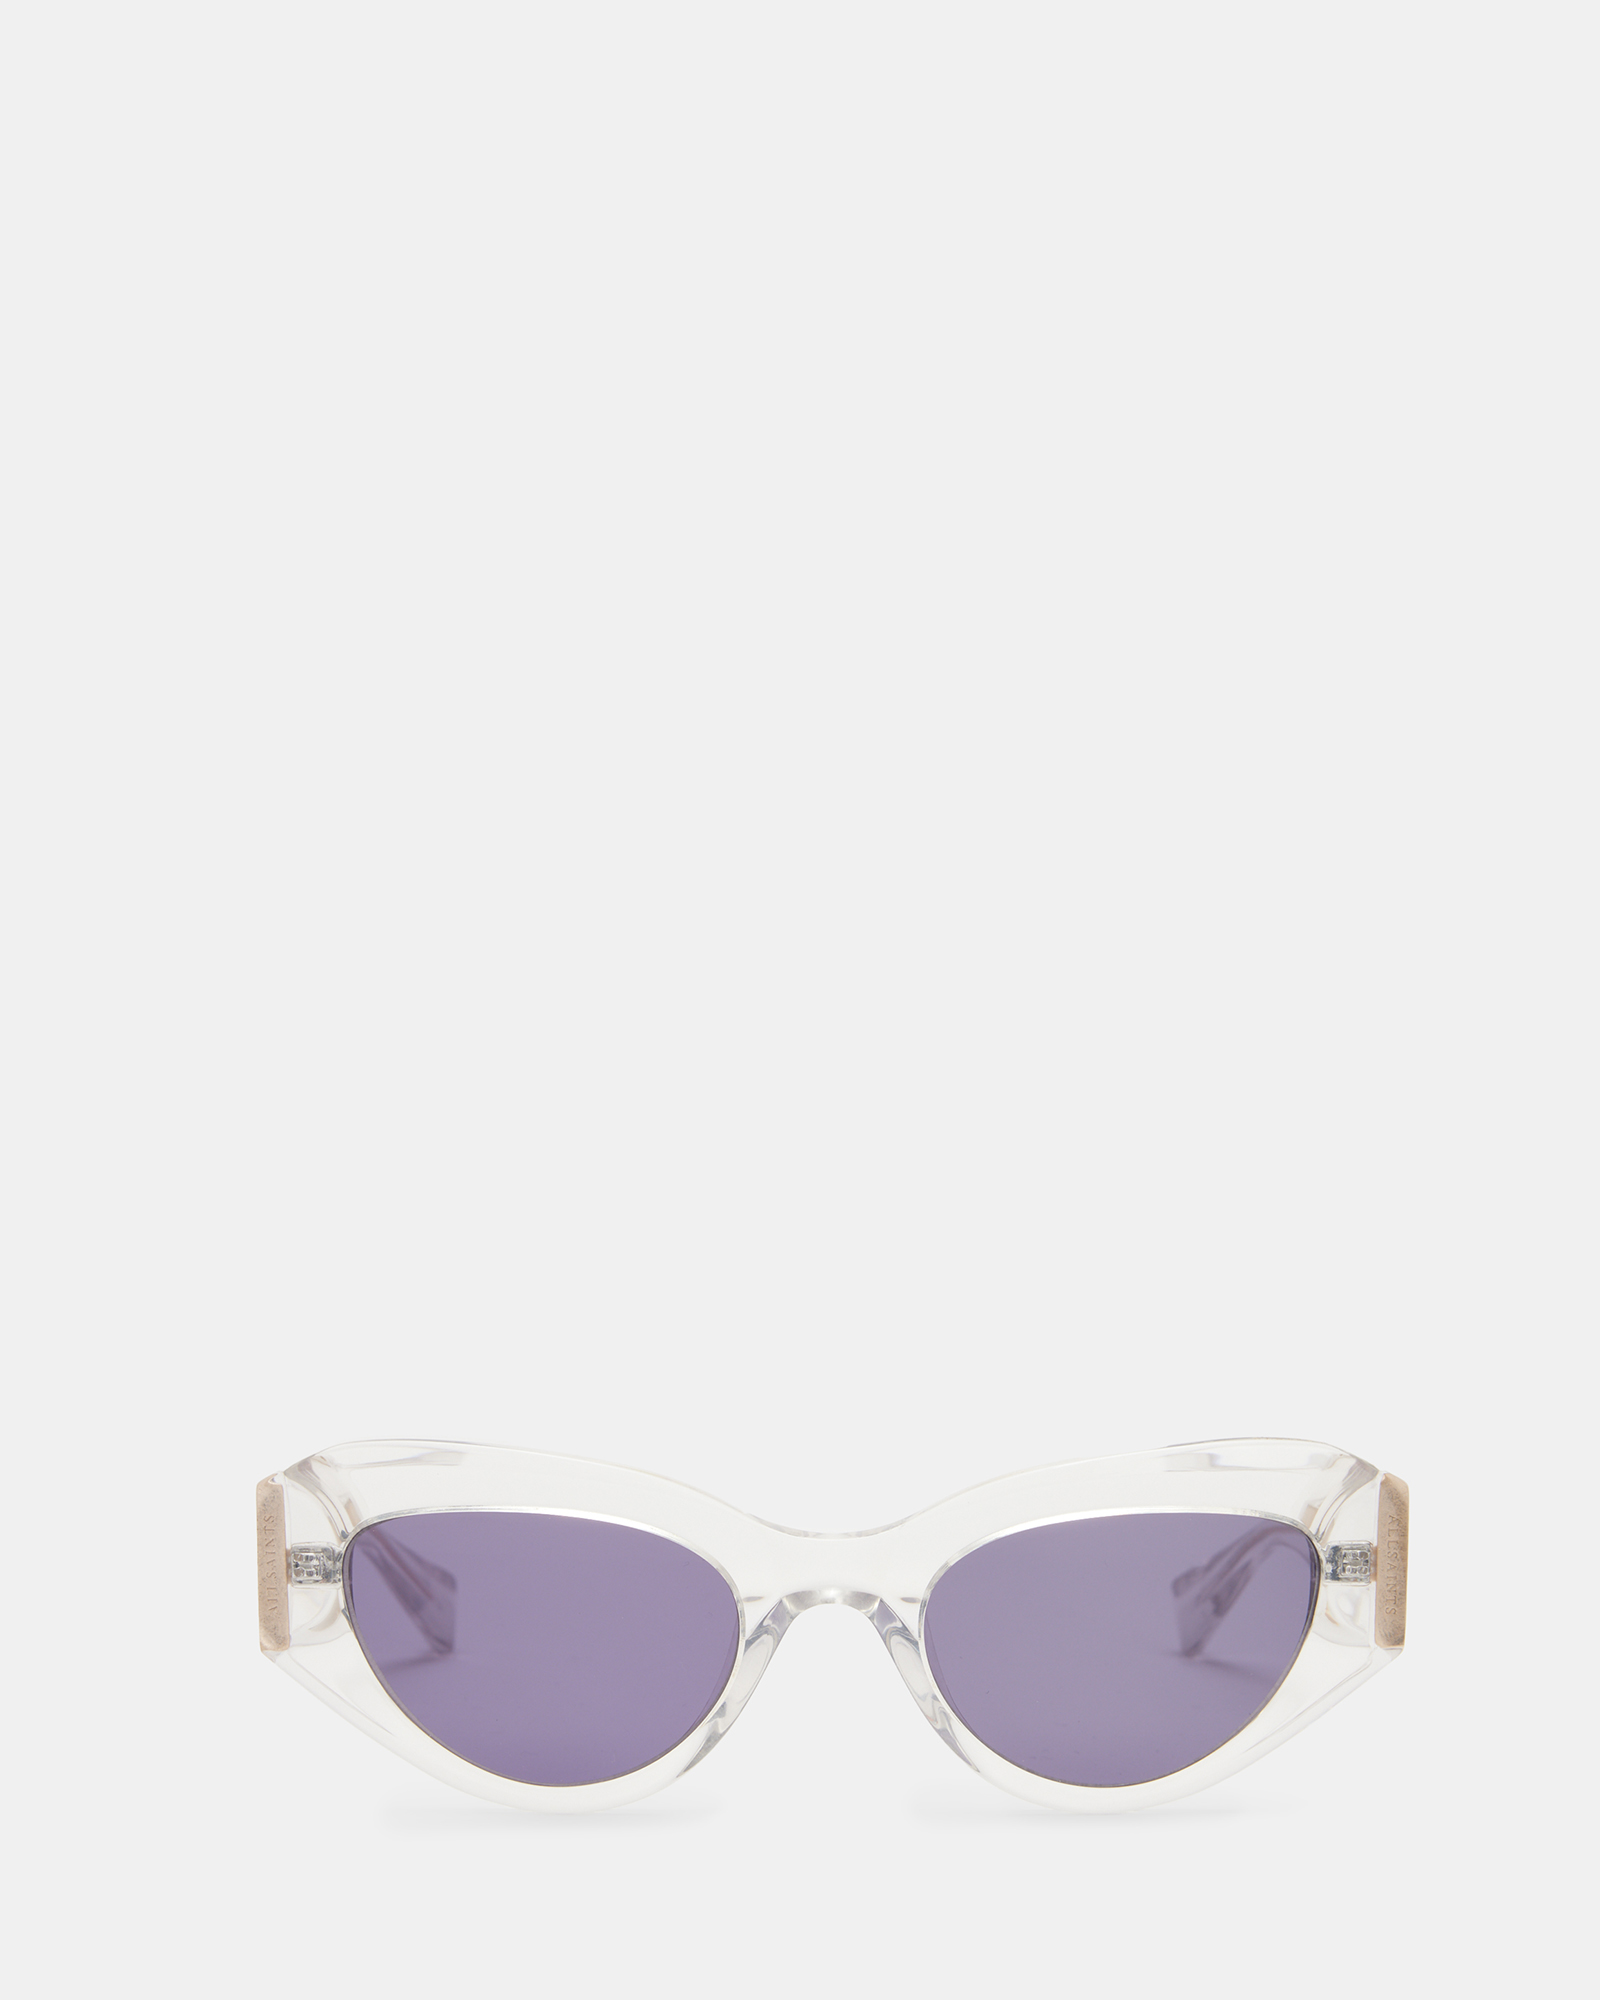 AllSaints Calypso Bevelled Cat Eye Sunglasses,, GRAPHITE CRYSTAL